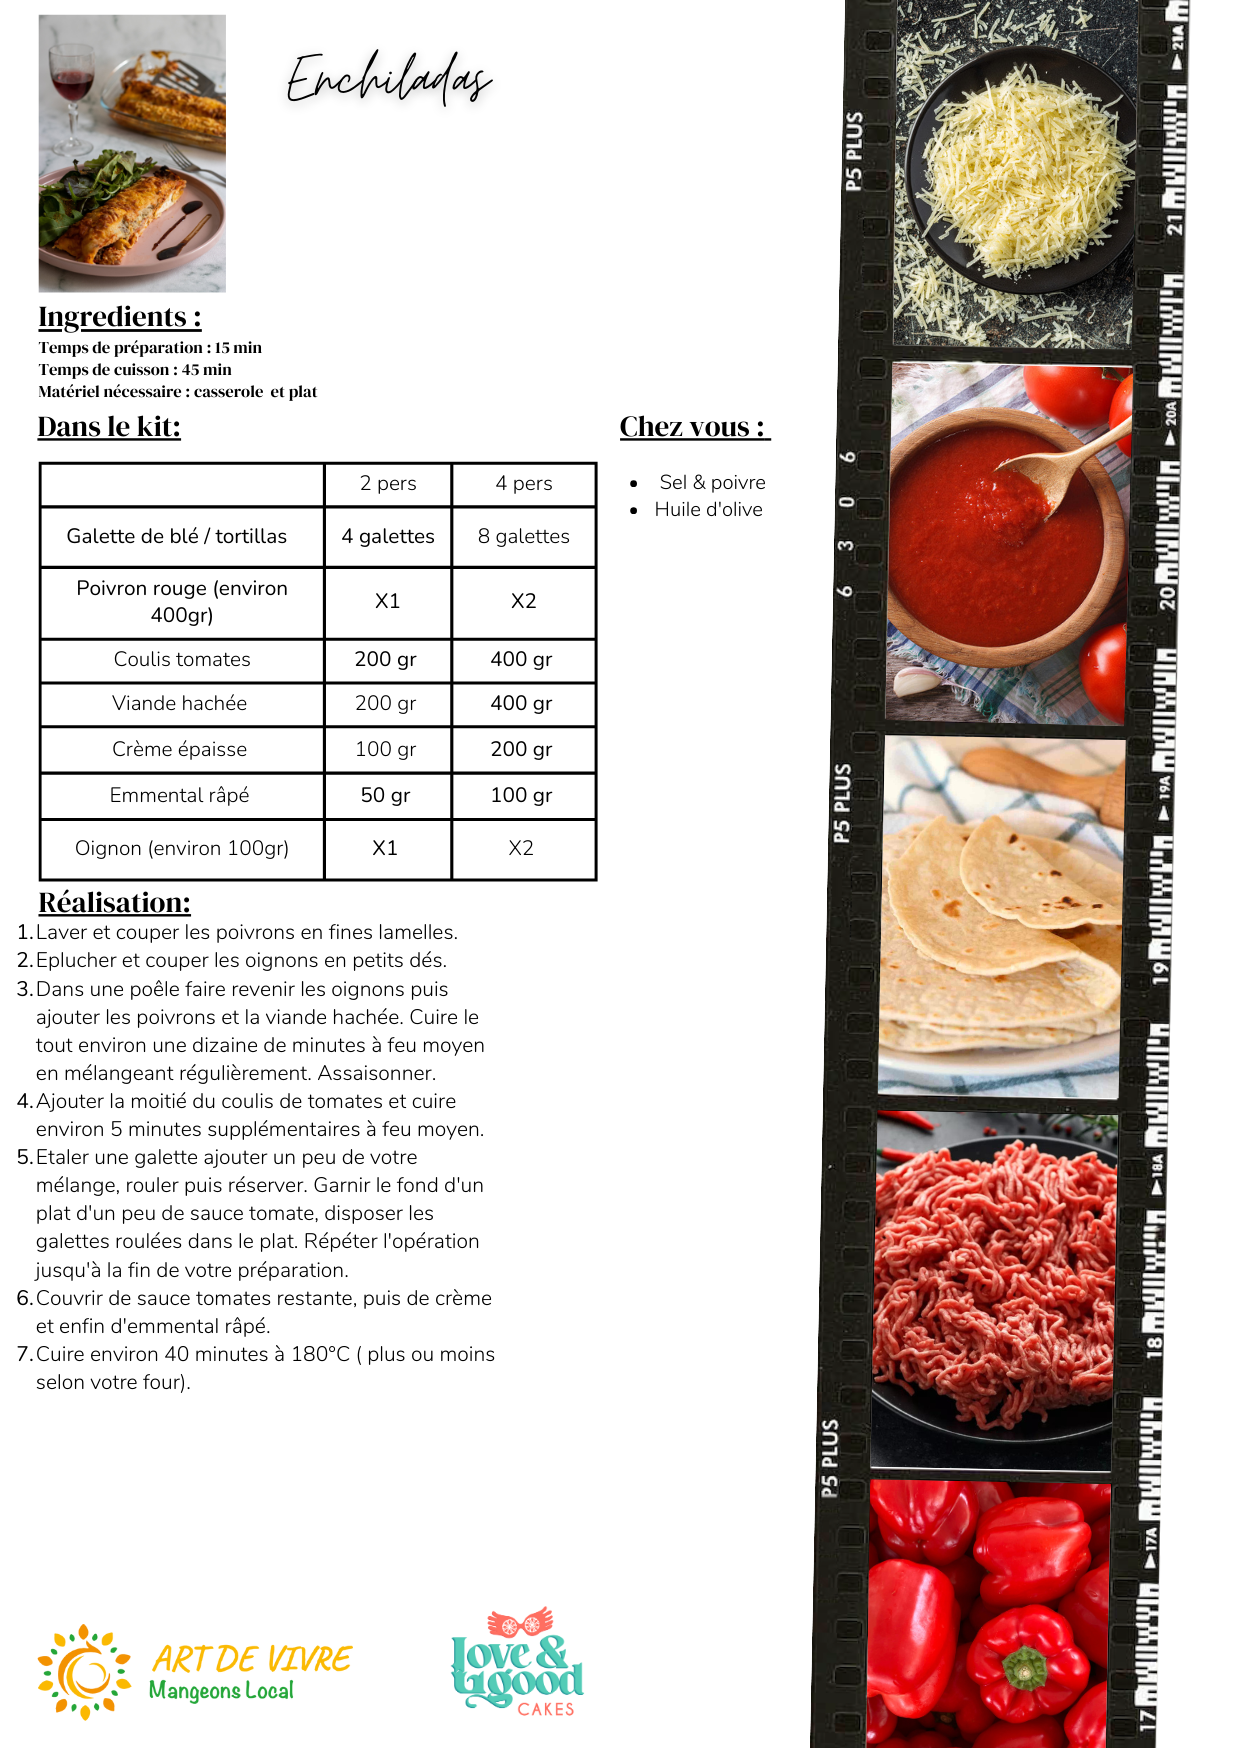 Enchiladas - 2 pers - 6,5€/pers